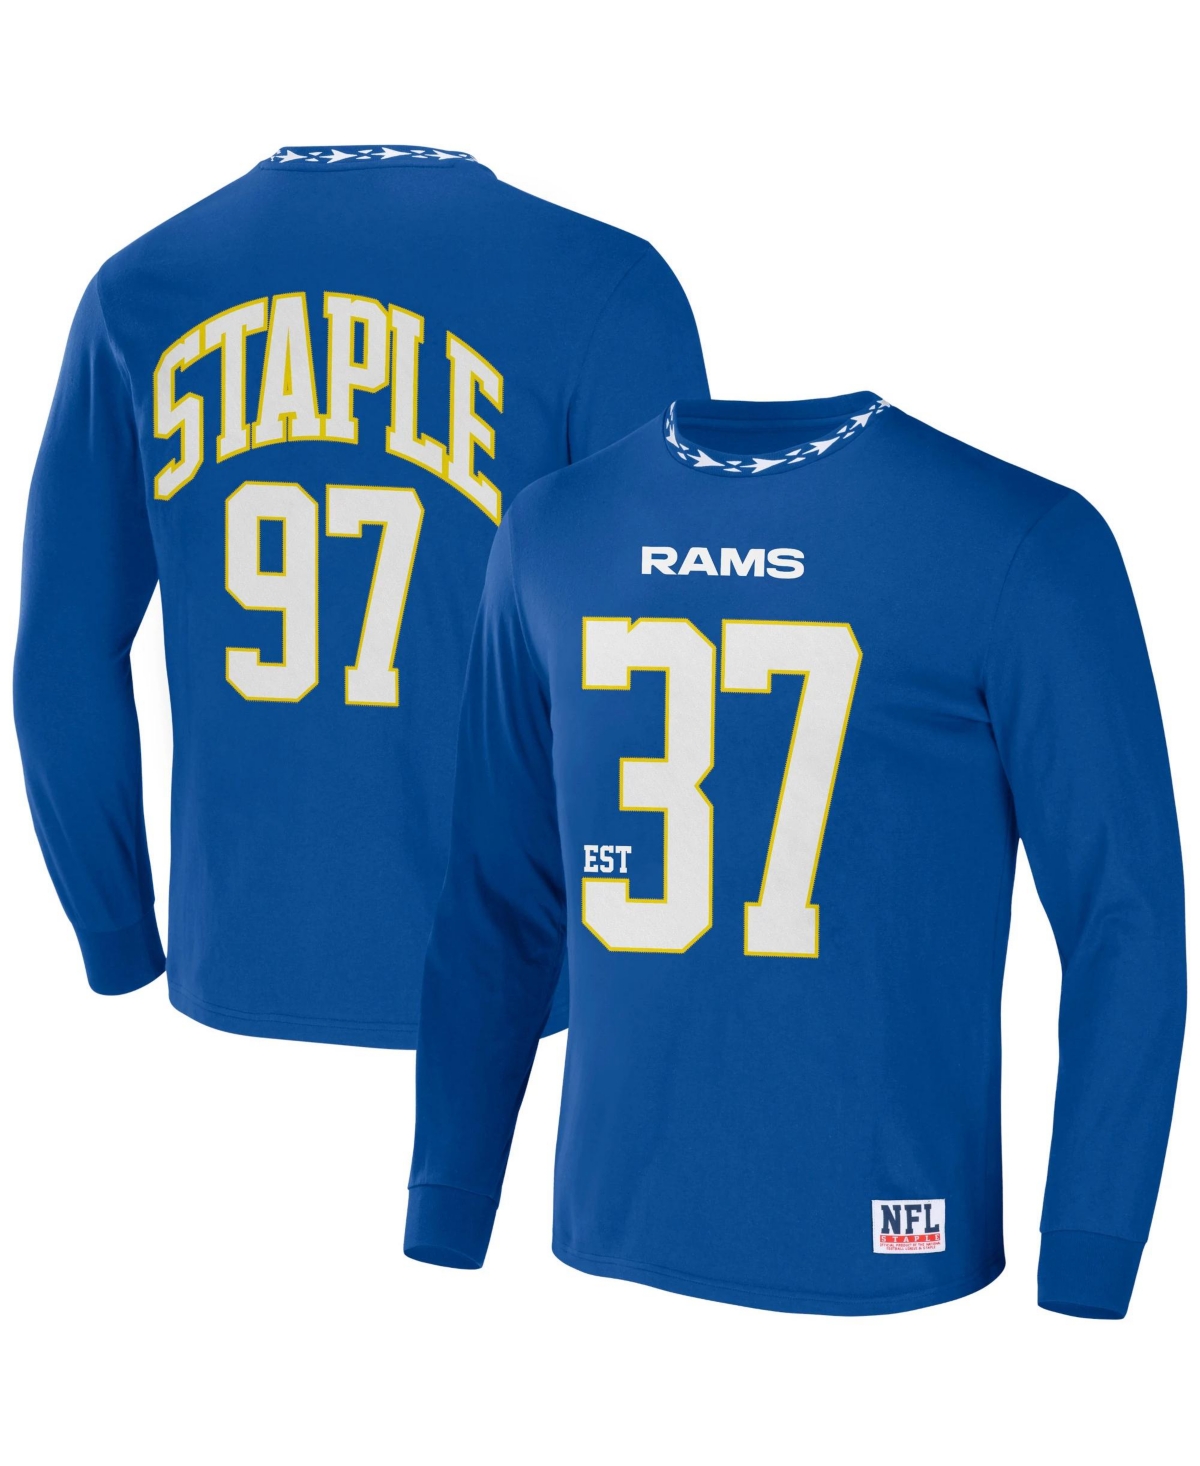 Men's Nfl X Staple Royal Los Angeles Rams Core Long Sleeve Jersey Style T-shirt - Royal